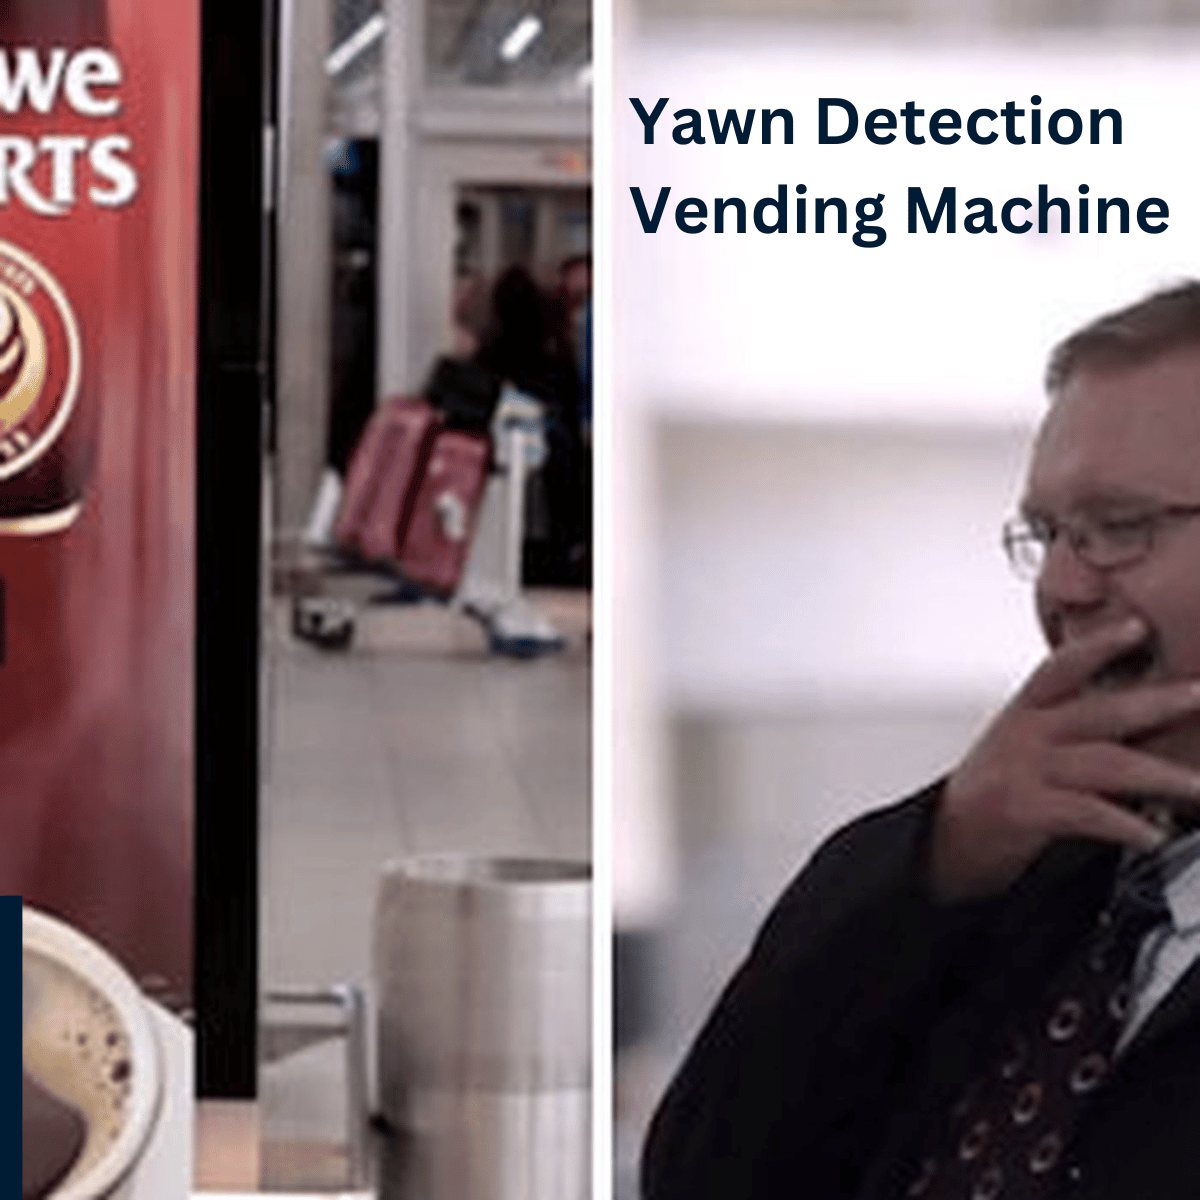 A COFFEE VENDING MACHINE THAT KNOWS WHEN YOU YAWN?